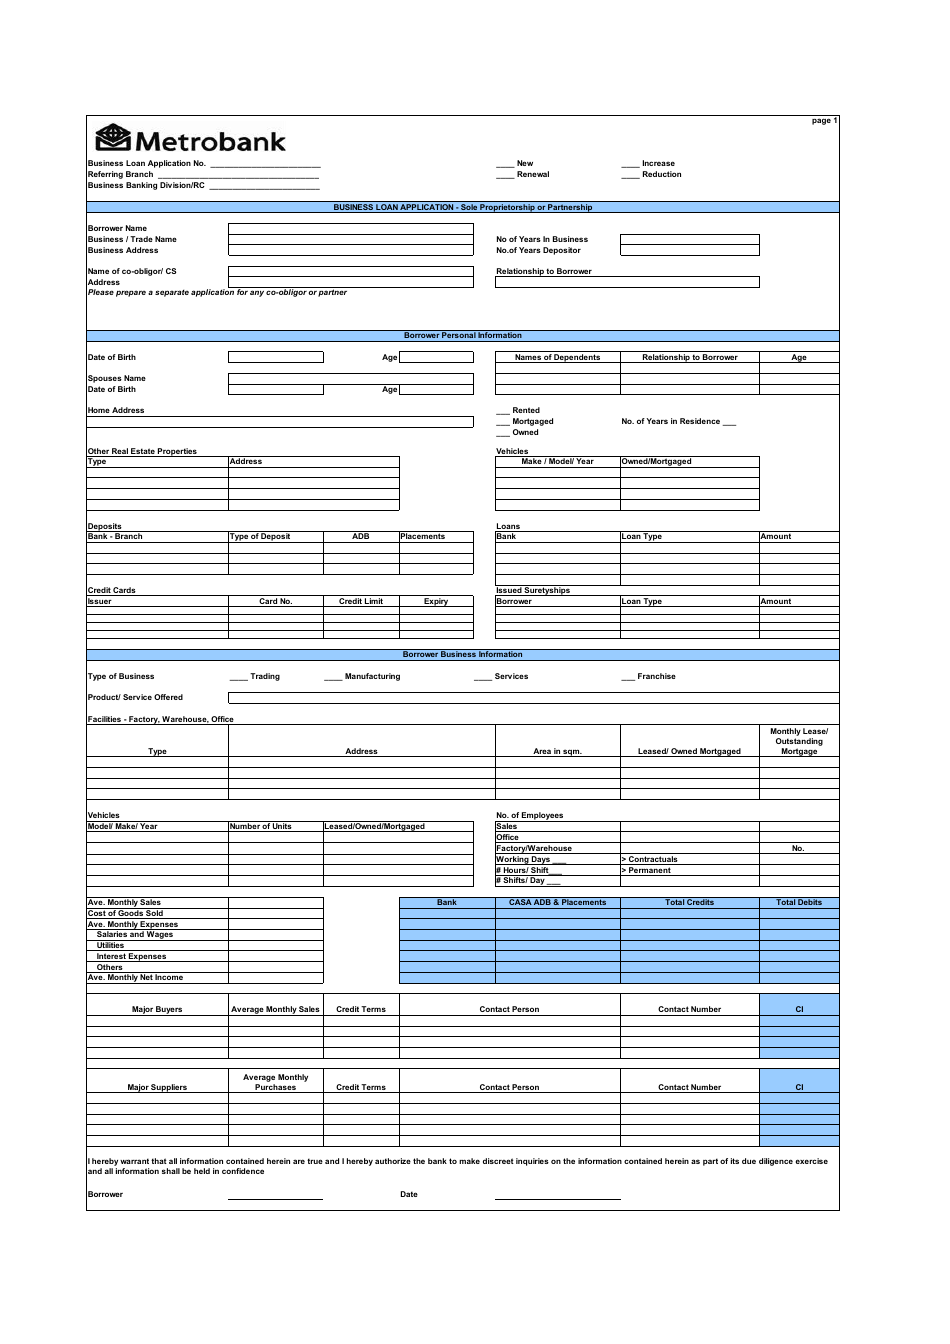 Business Loan Application Form - Metrobank, Page 1